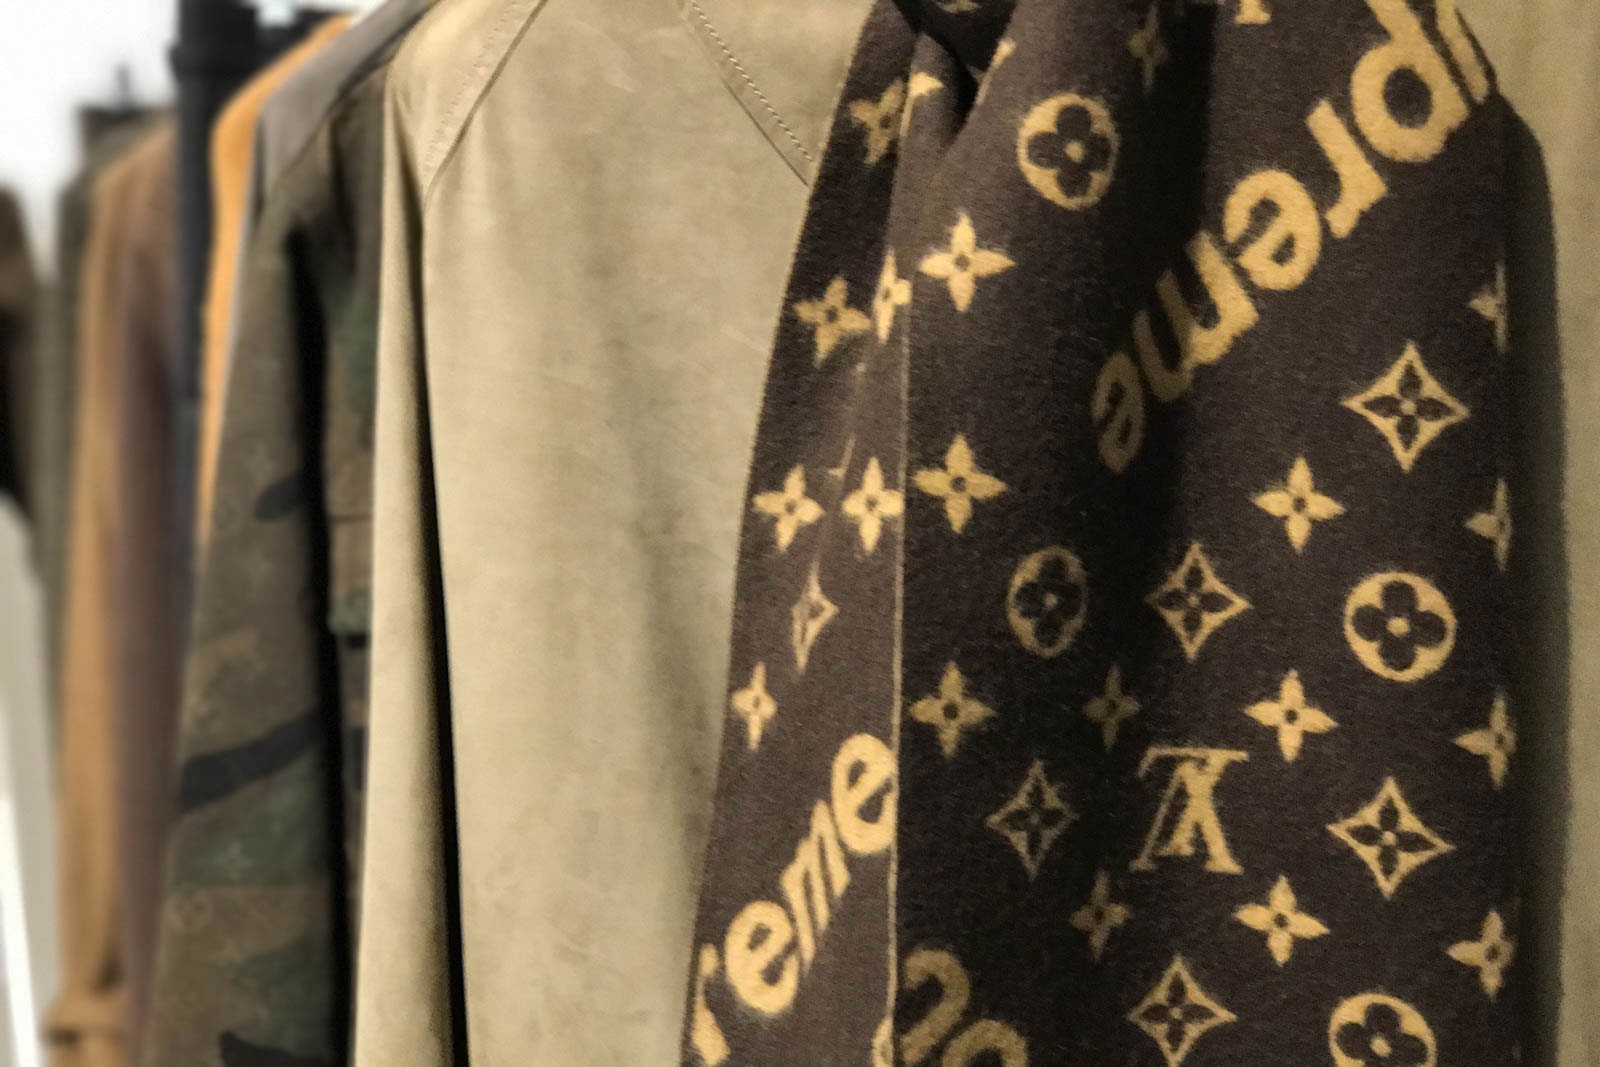 Supreme x Louis Vuitton 2017 Fall/Winter Closer Look Showroom